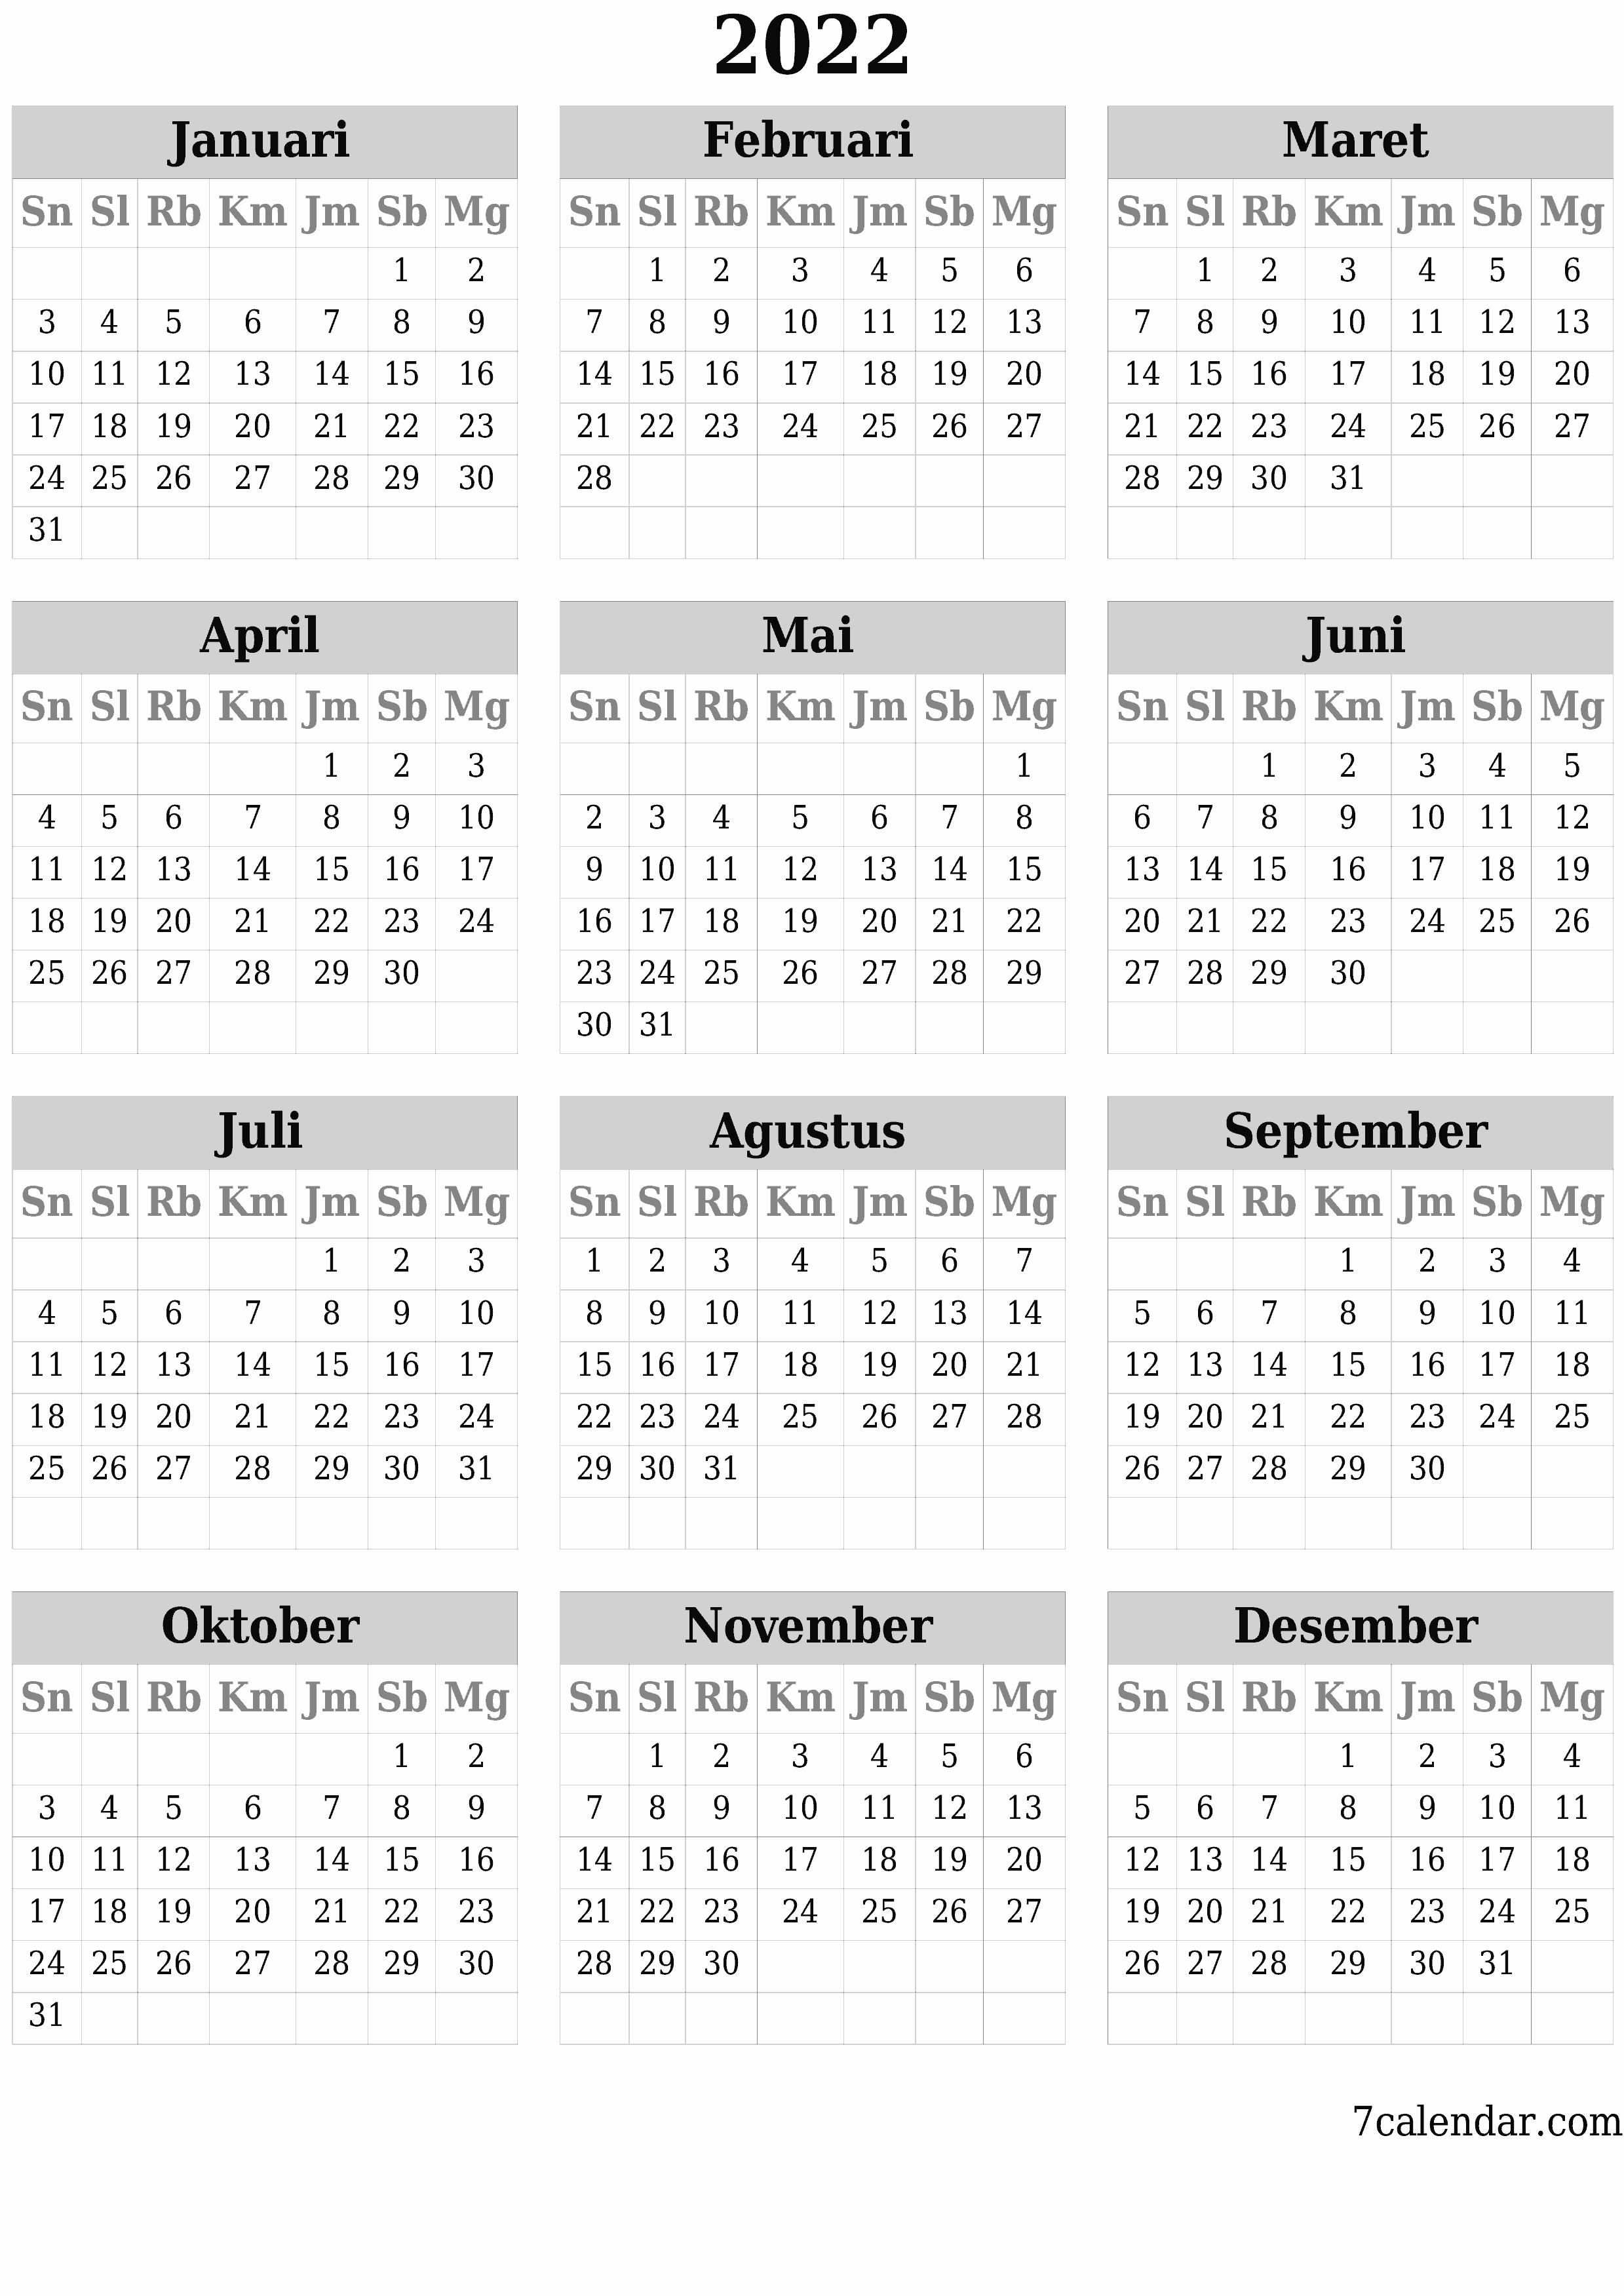 Kalender tahunan kosong untuk tahun 2022 simpan dan cetak ke PDF PNG Indonesian - 7calendar.com